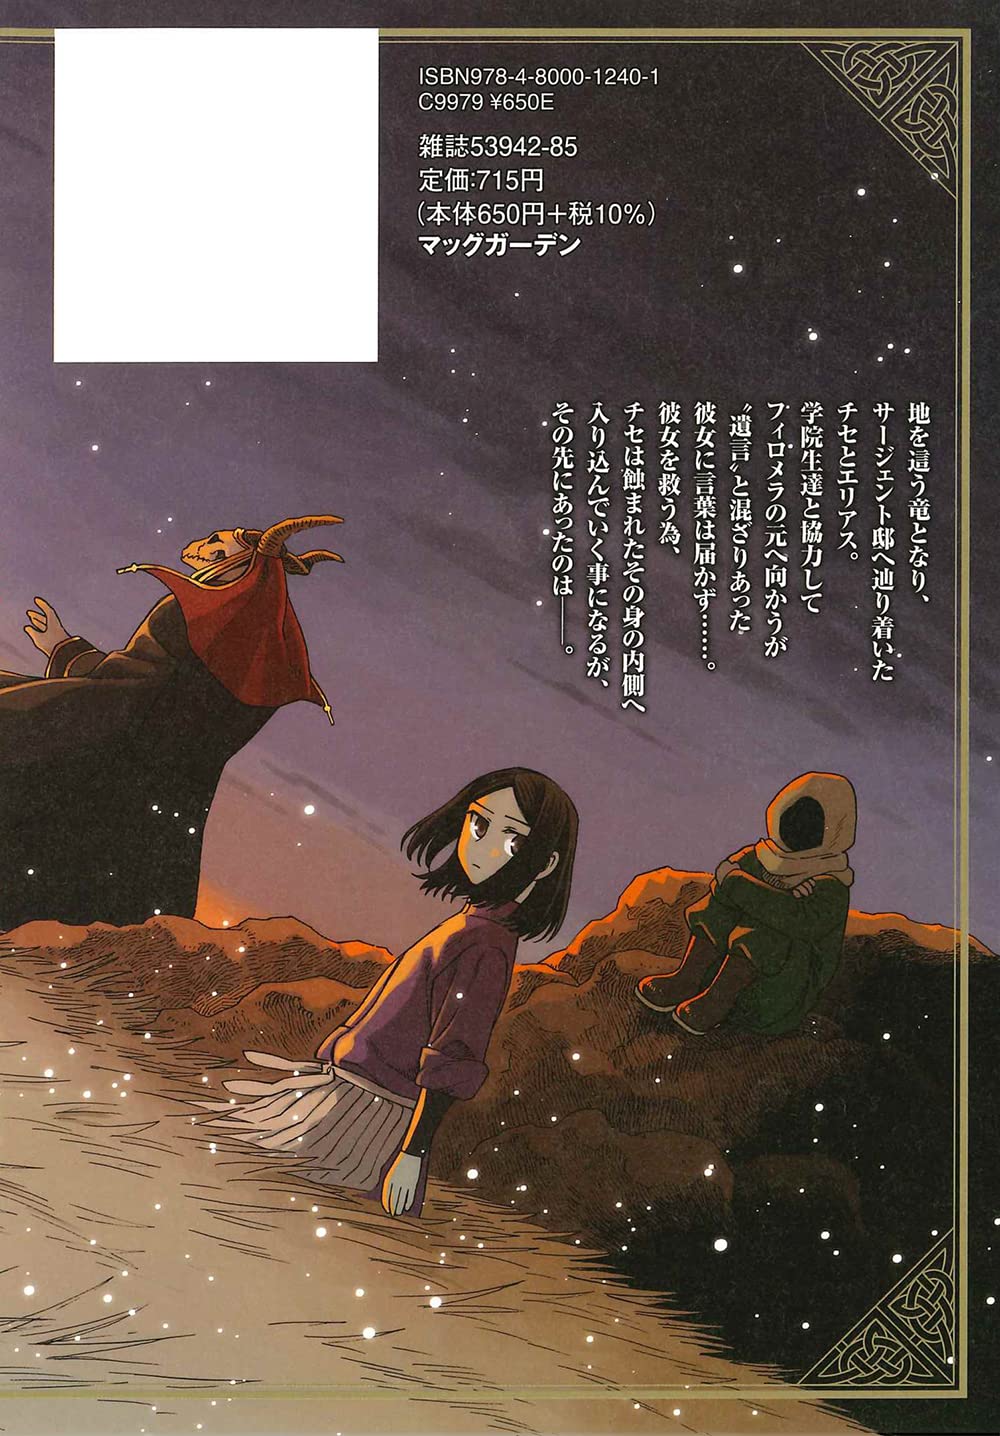 The Ancient Magus' Bride 19 comic Manga Mahoutsukai no yome Kore Japanese  Book